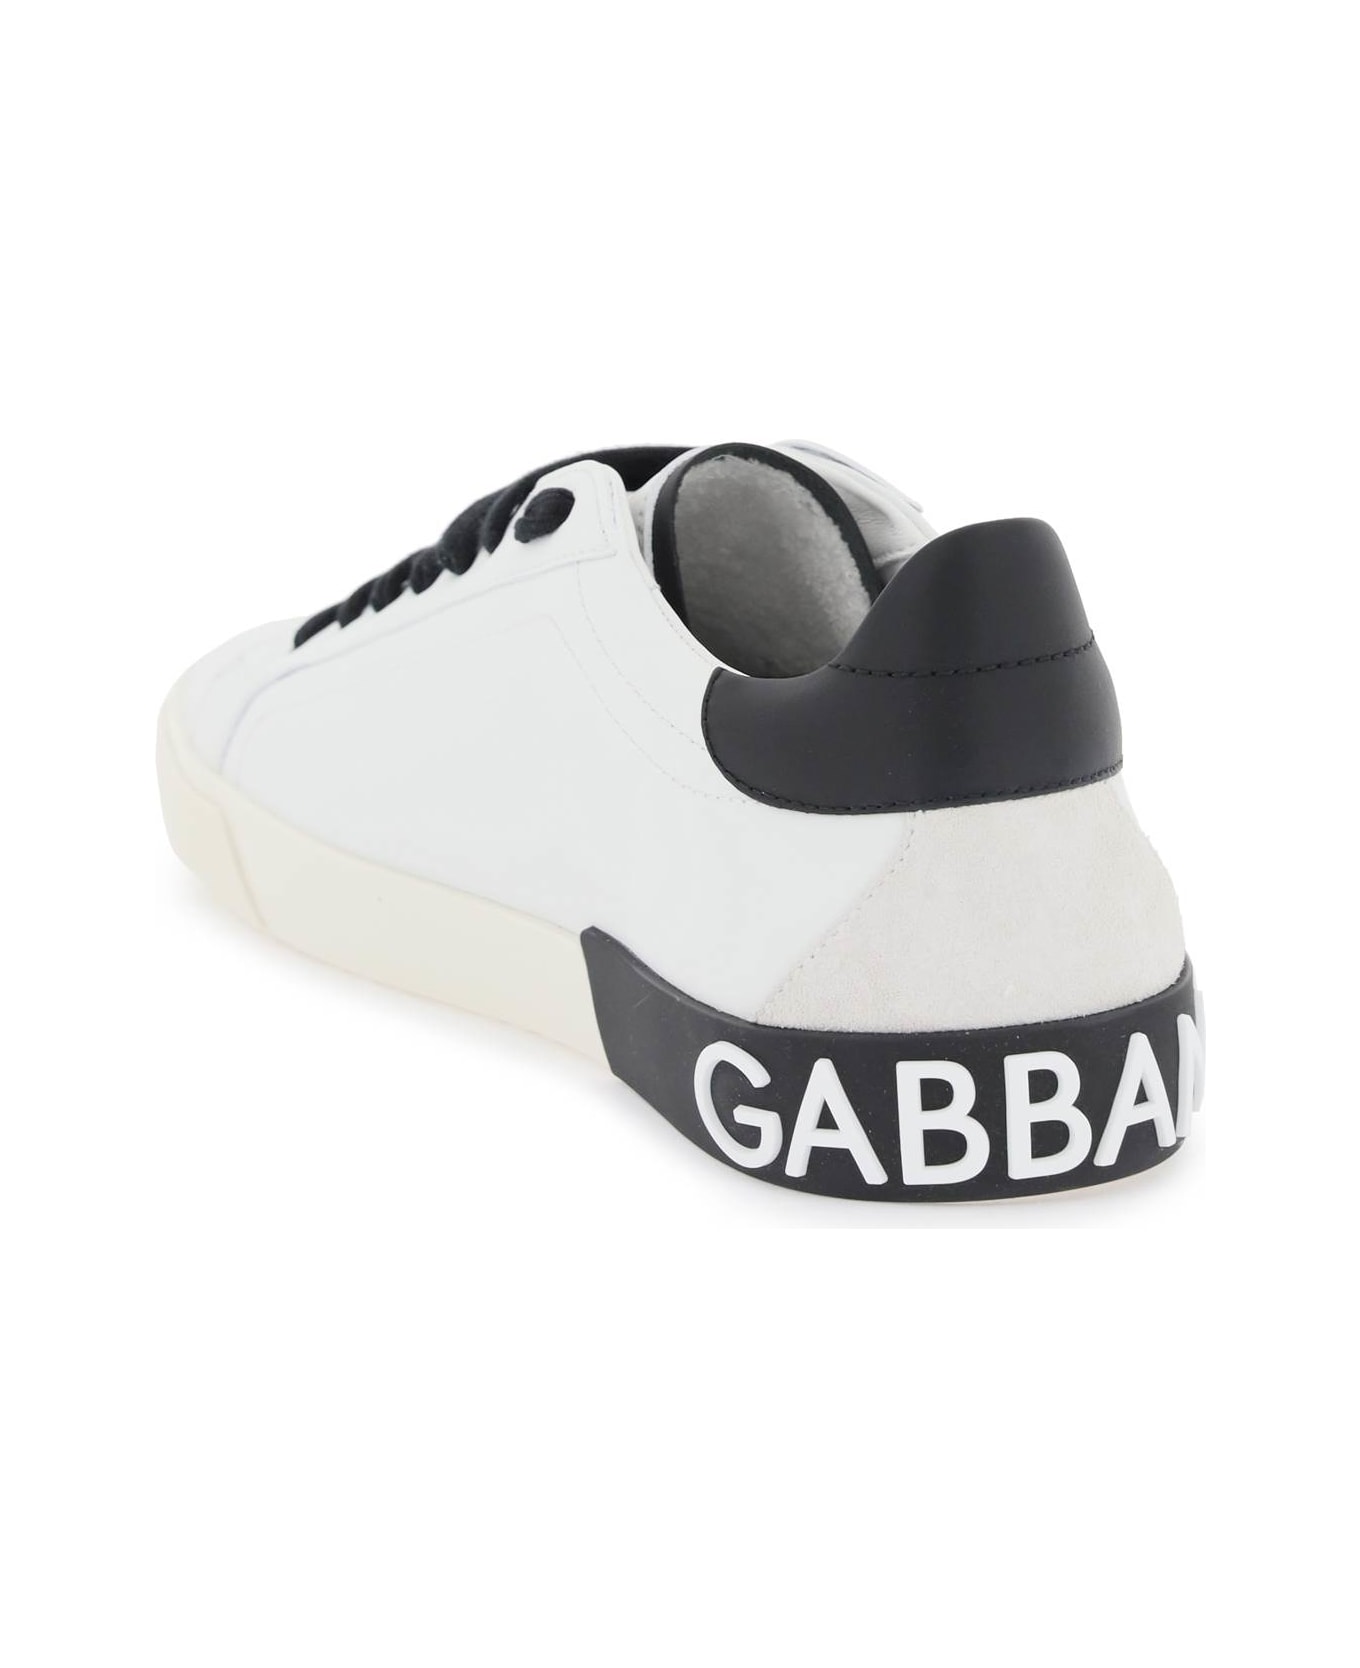 Asics Mens GEL-Game 8 Tennis Shoes Portofino Nappa Leather Sneakers - WHITE/BLACK